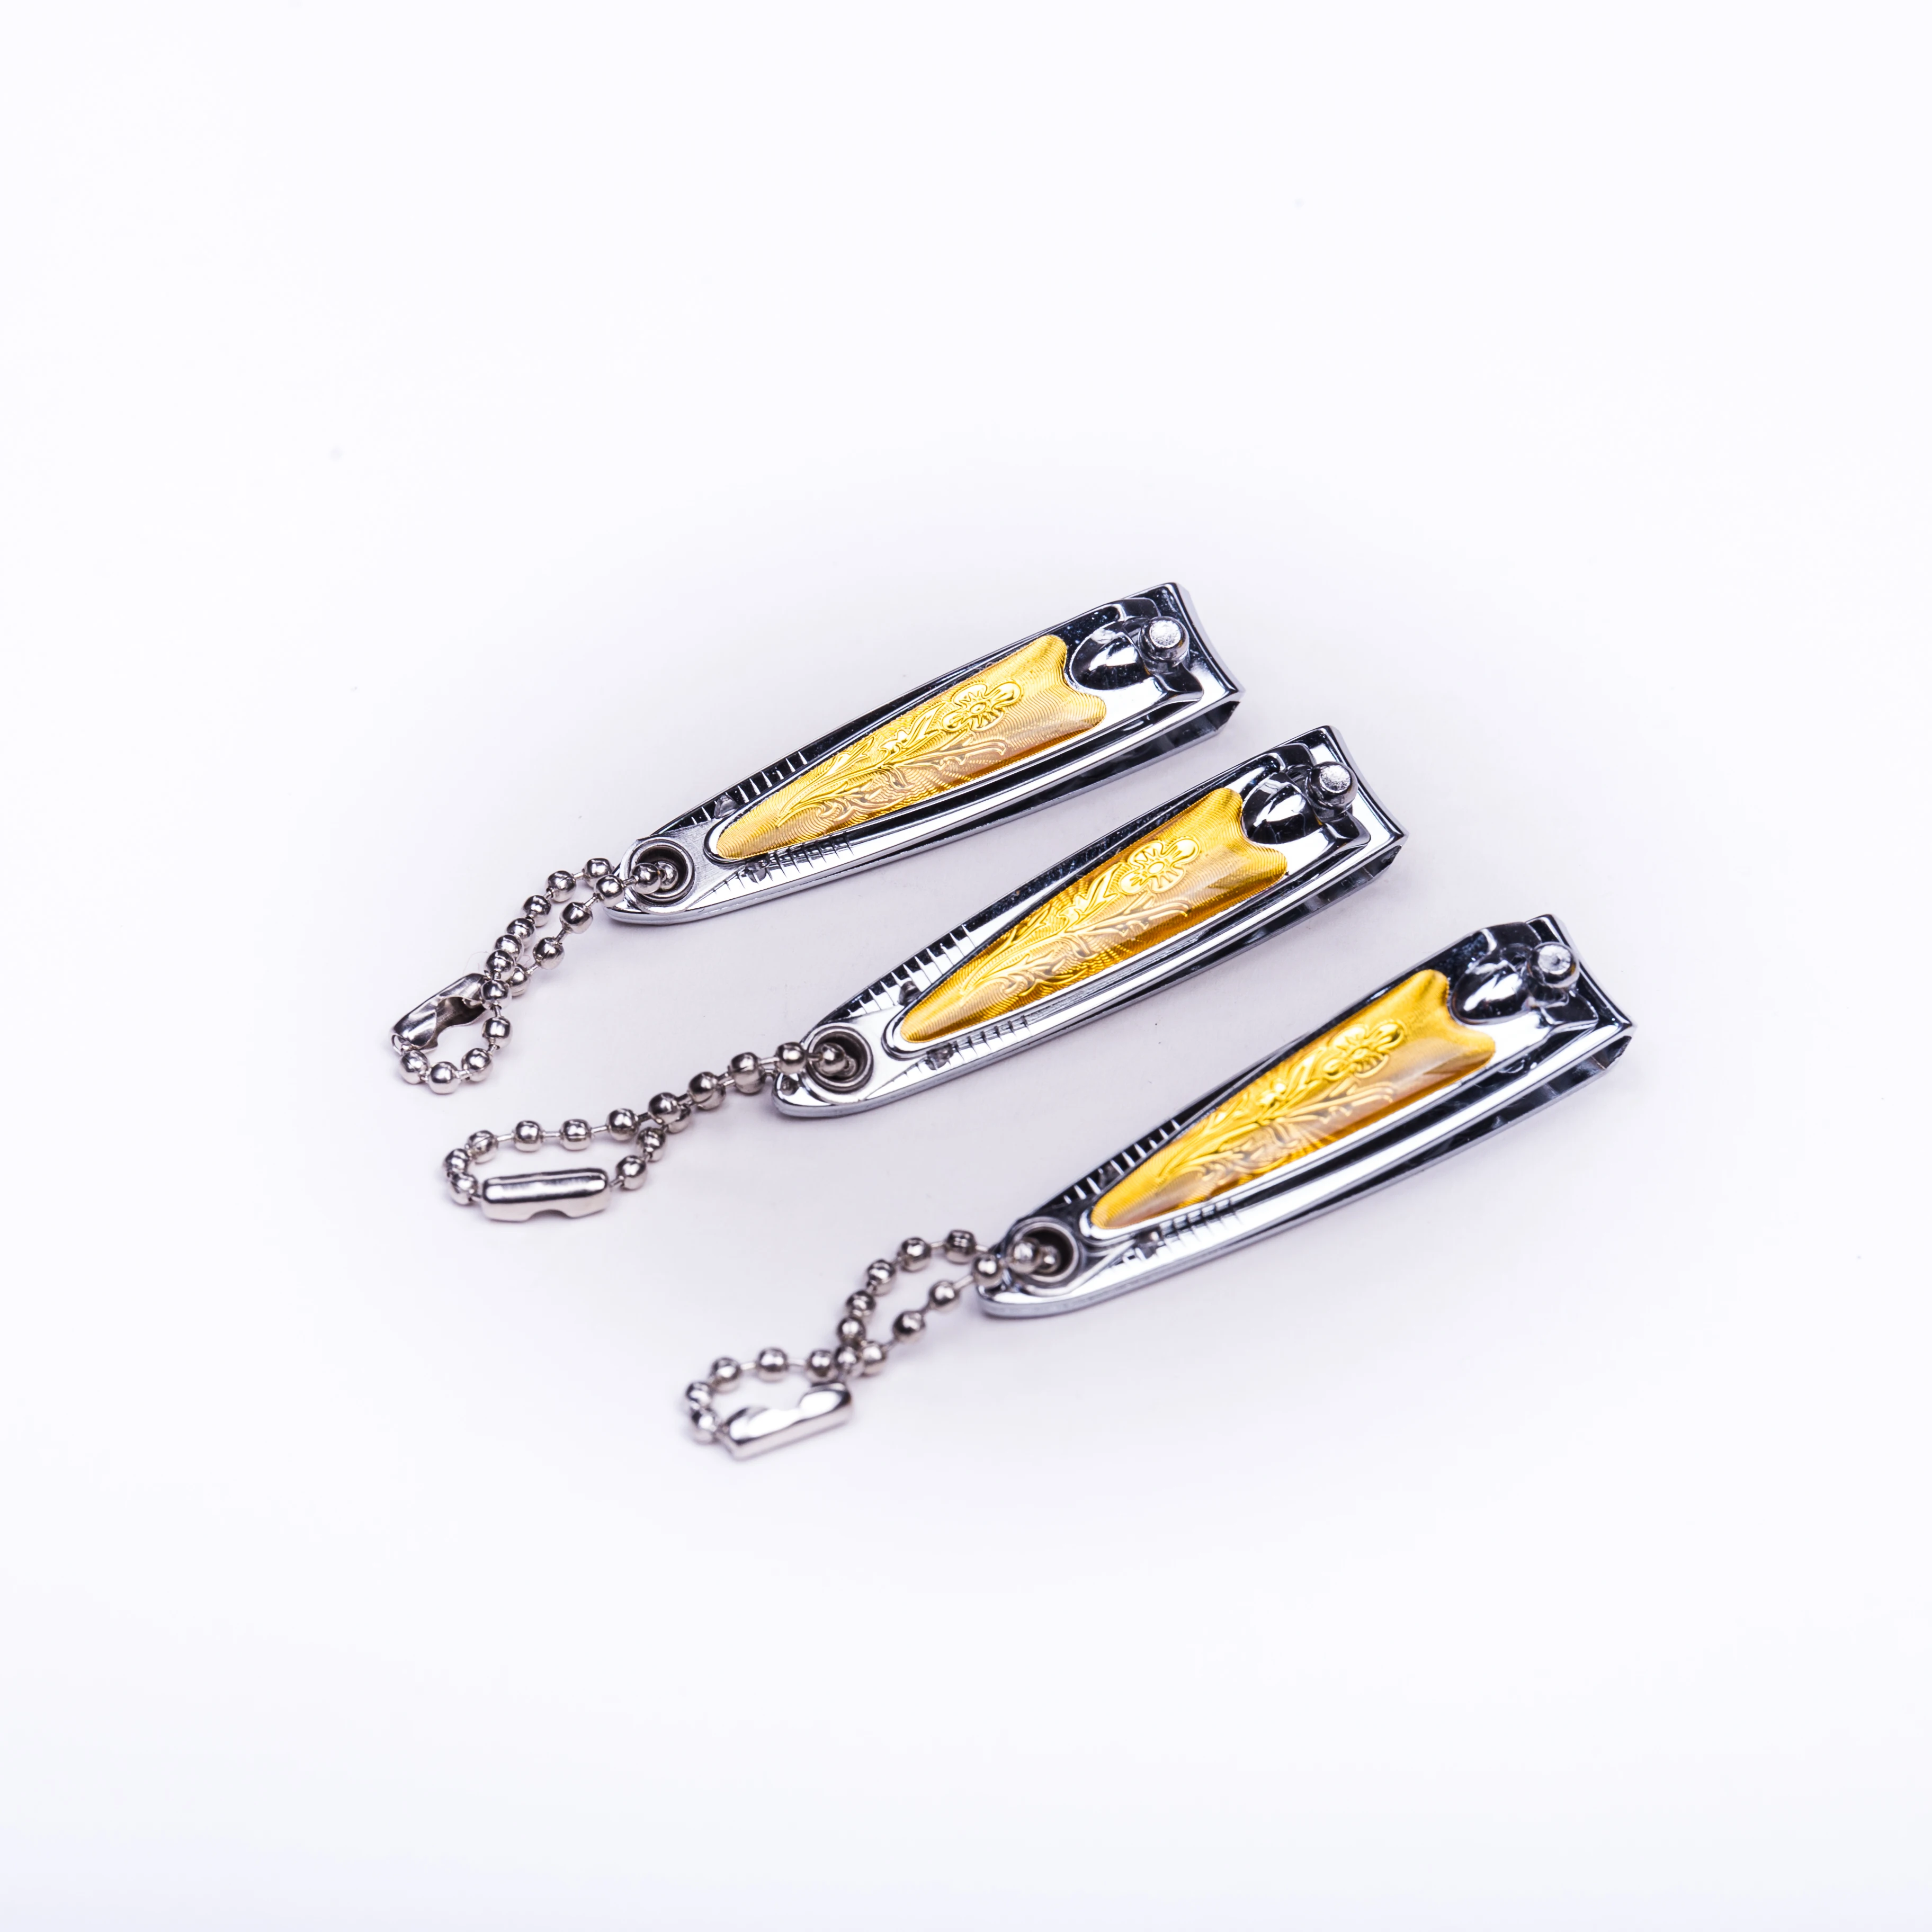 777 Three Seven Nail Clipper Trimmer Cutter Small Size + side nail clipper  korea | eBay